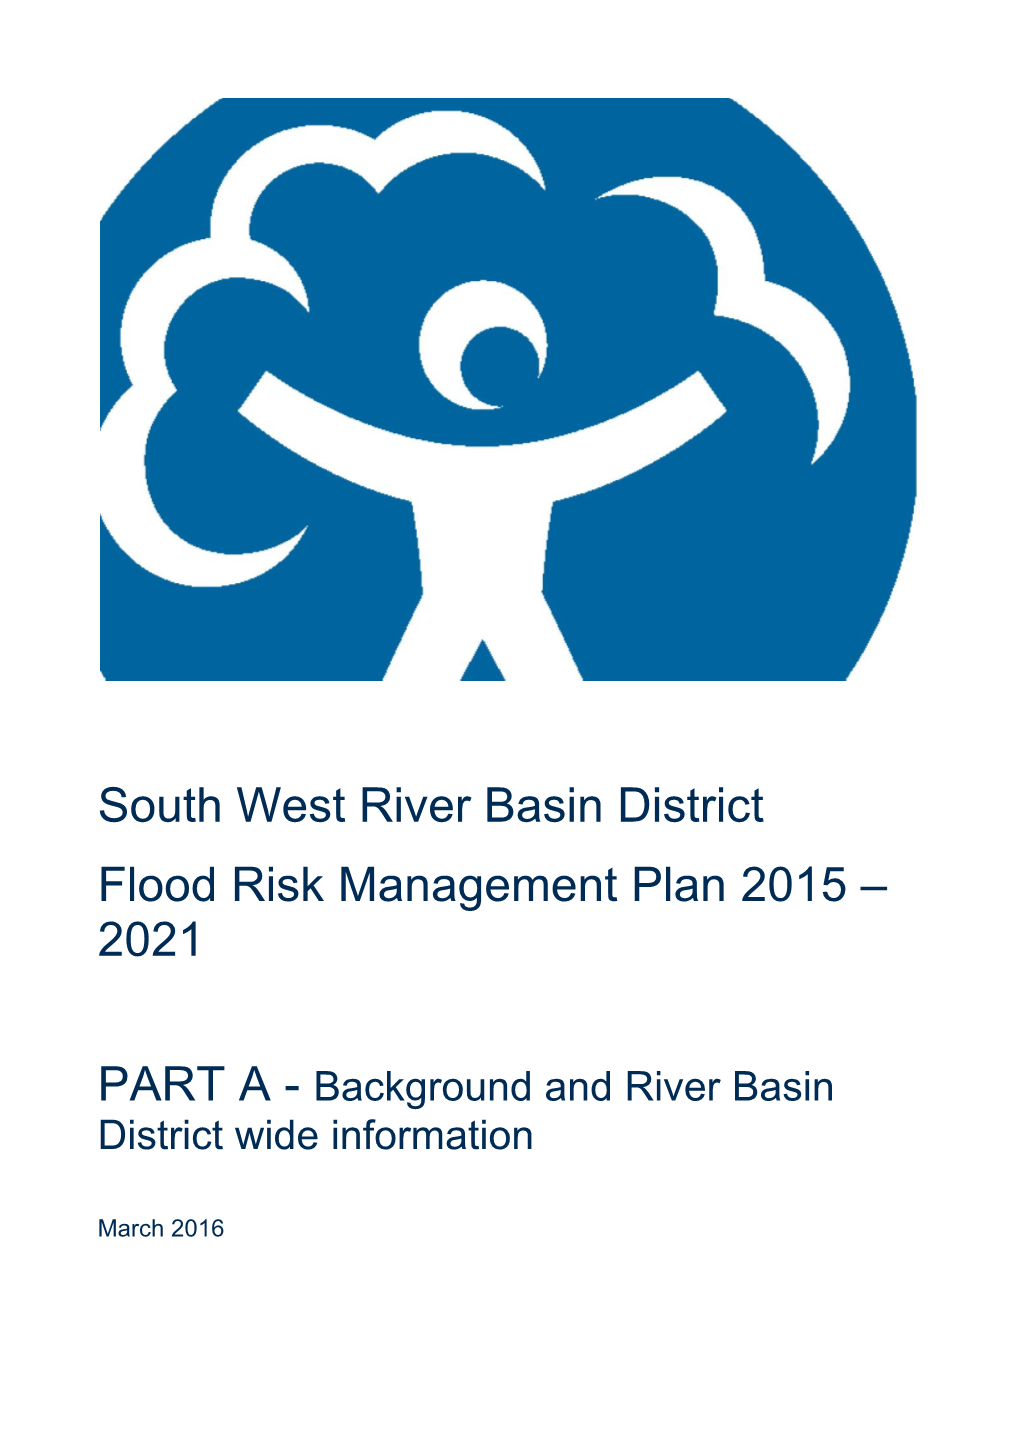 South West River Basin District Flood Risk Management Plan 2015 – 2021